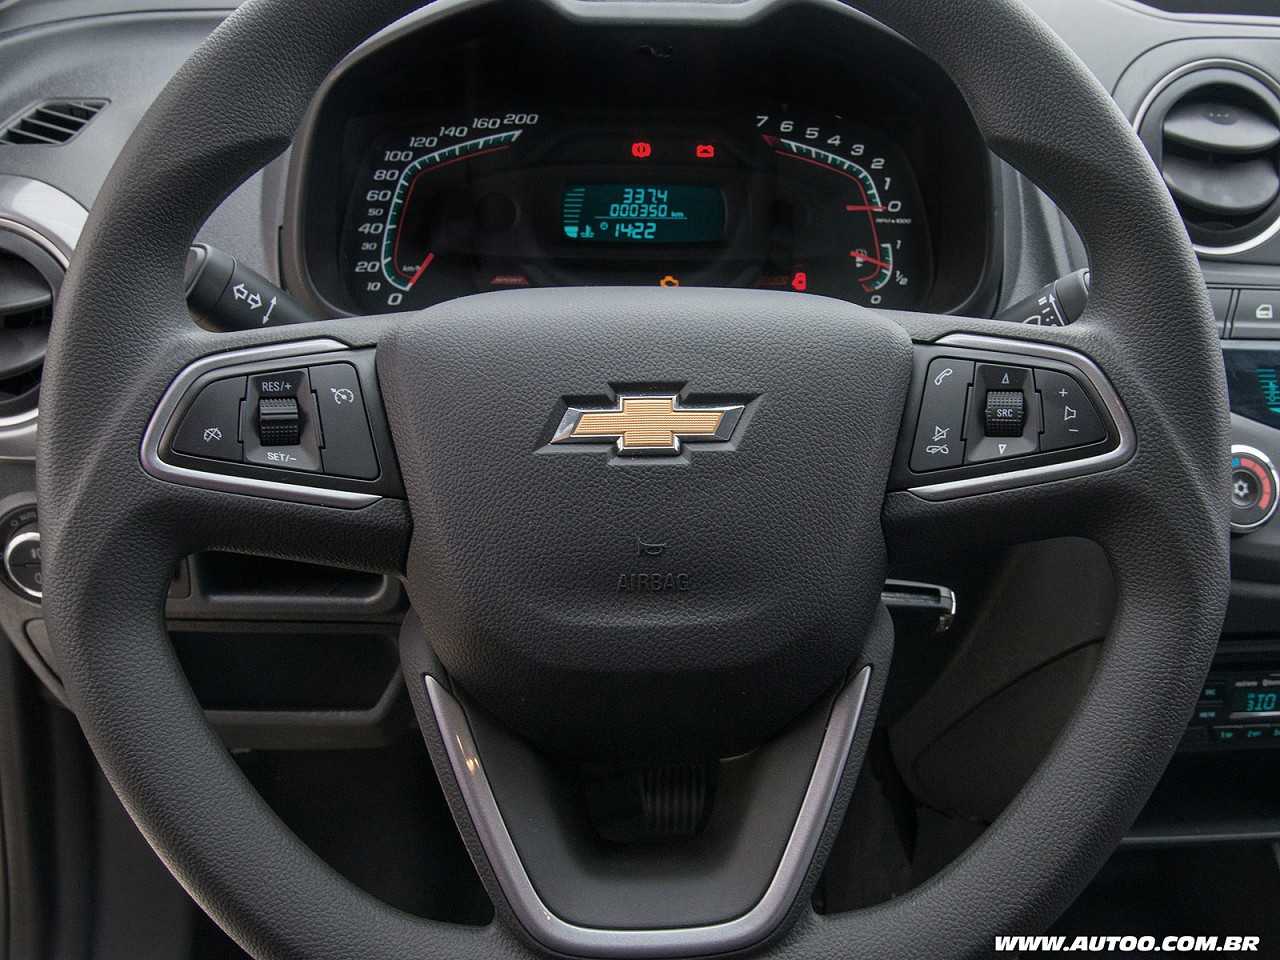 ChevroletMontana 2018 - volante